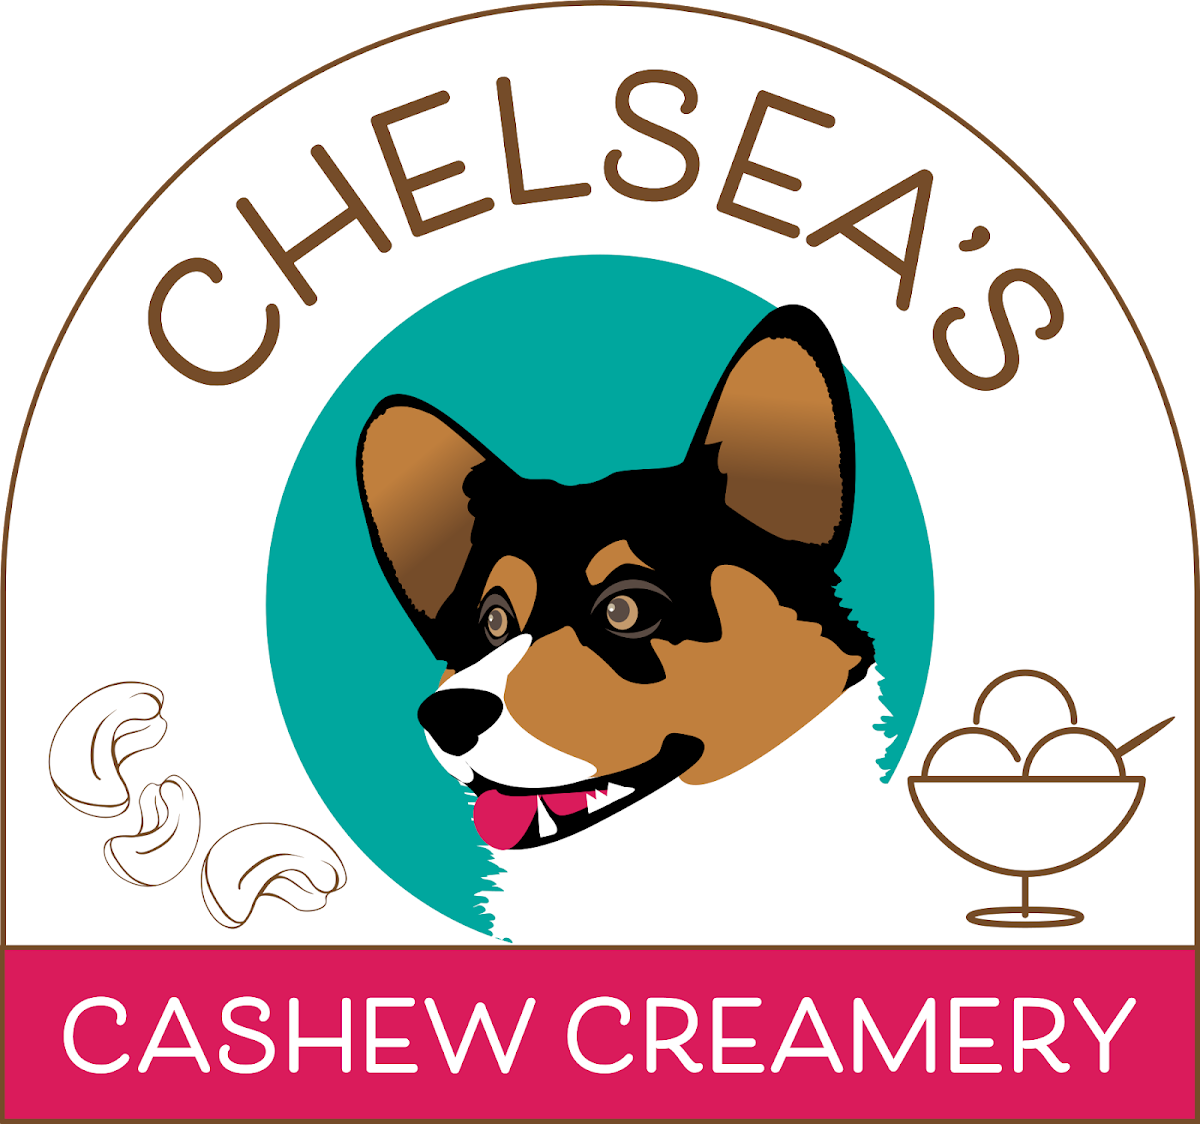 Chelsea's Chews Cashew Creamery gluten-free menu